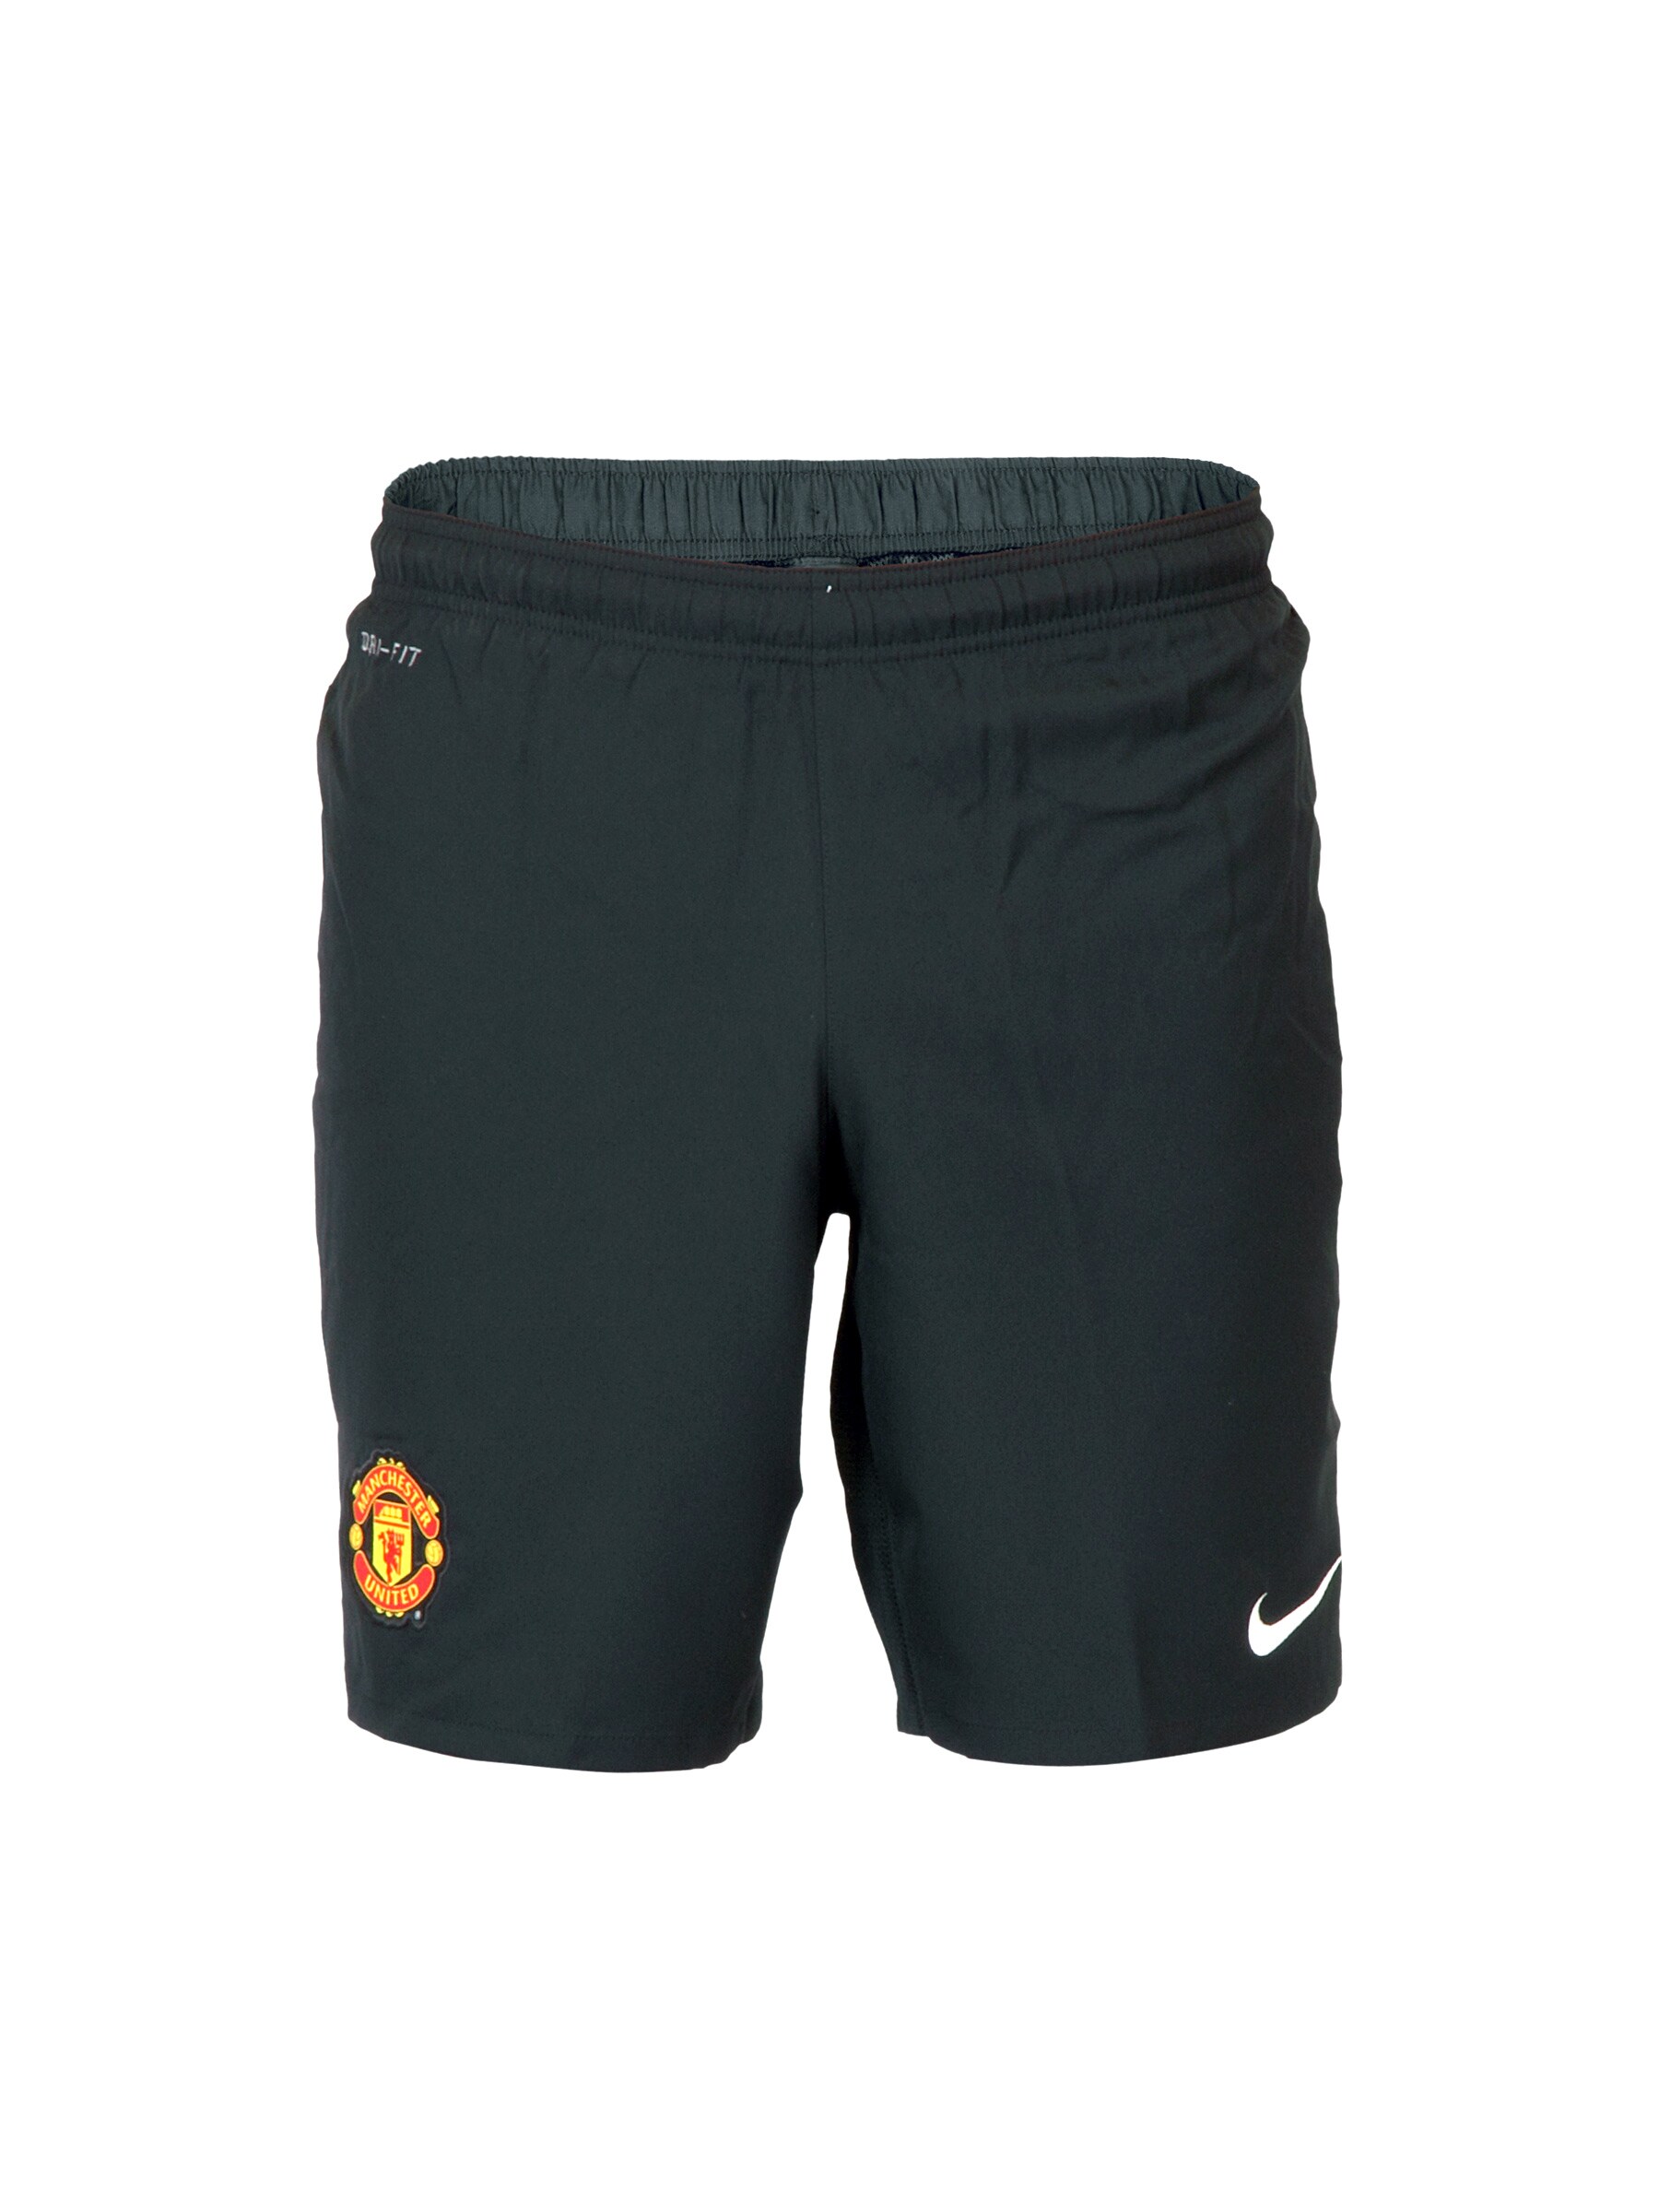 Nike Men Football/Soccer Black Shorts